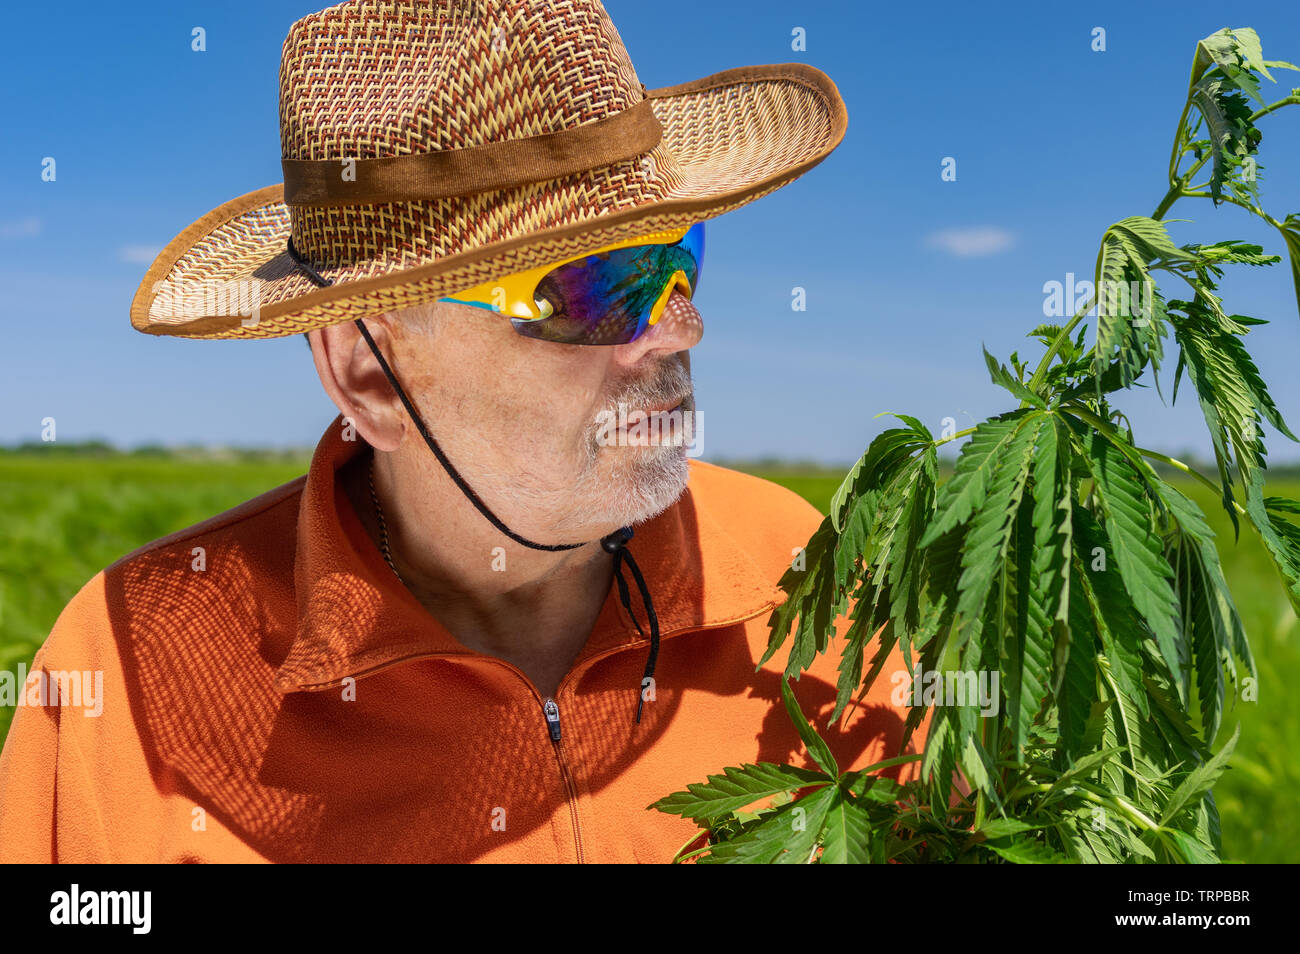 Outdoor portrait of bearded Caucasian senior man wearing orange sweatshirt, straw hat and chameleon sunglasses examining hemp plant Stock Photo